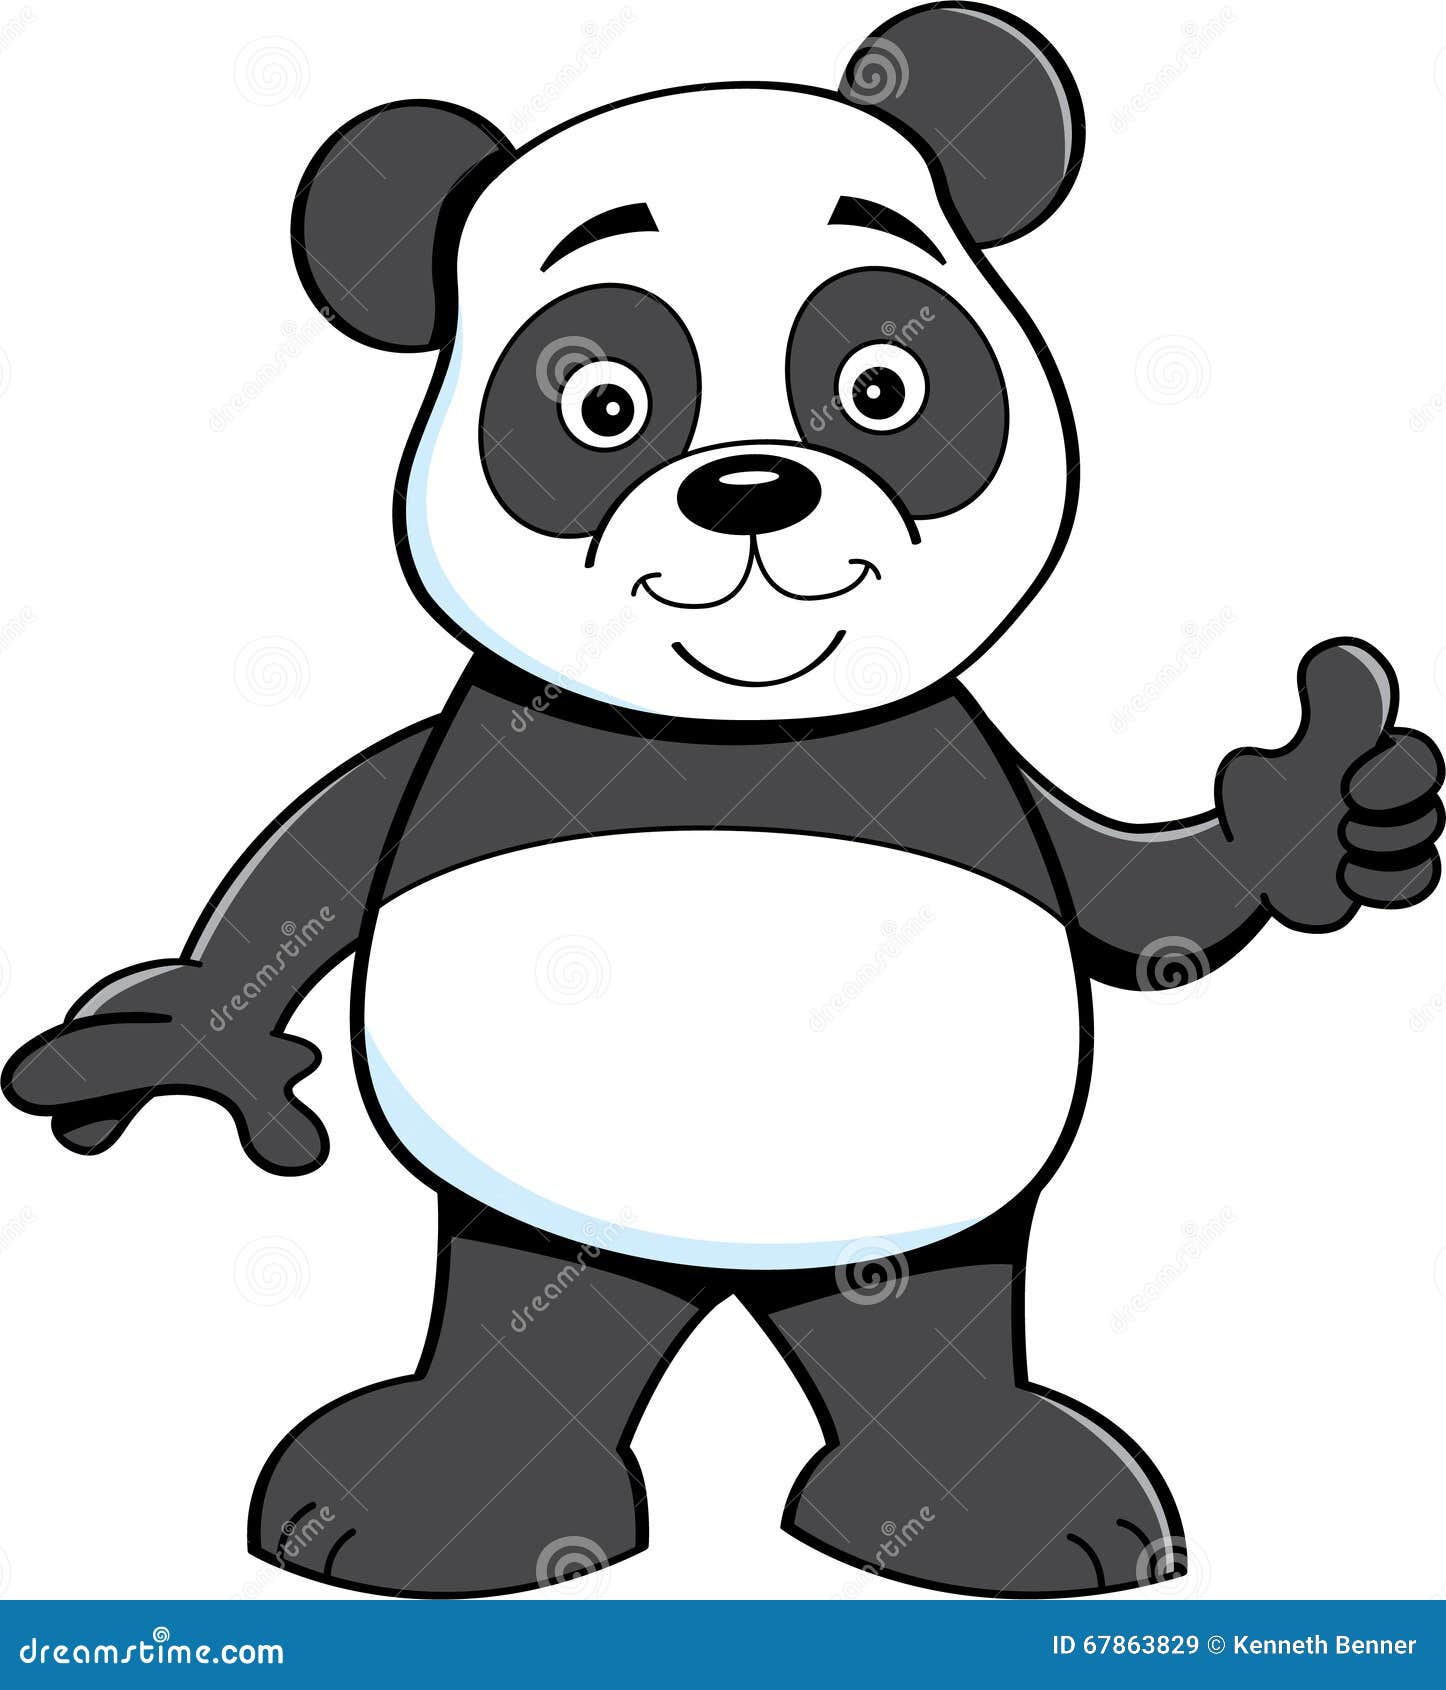 clipart panda thumbs up - photo #14